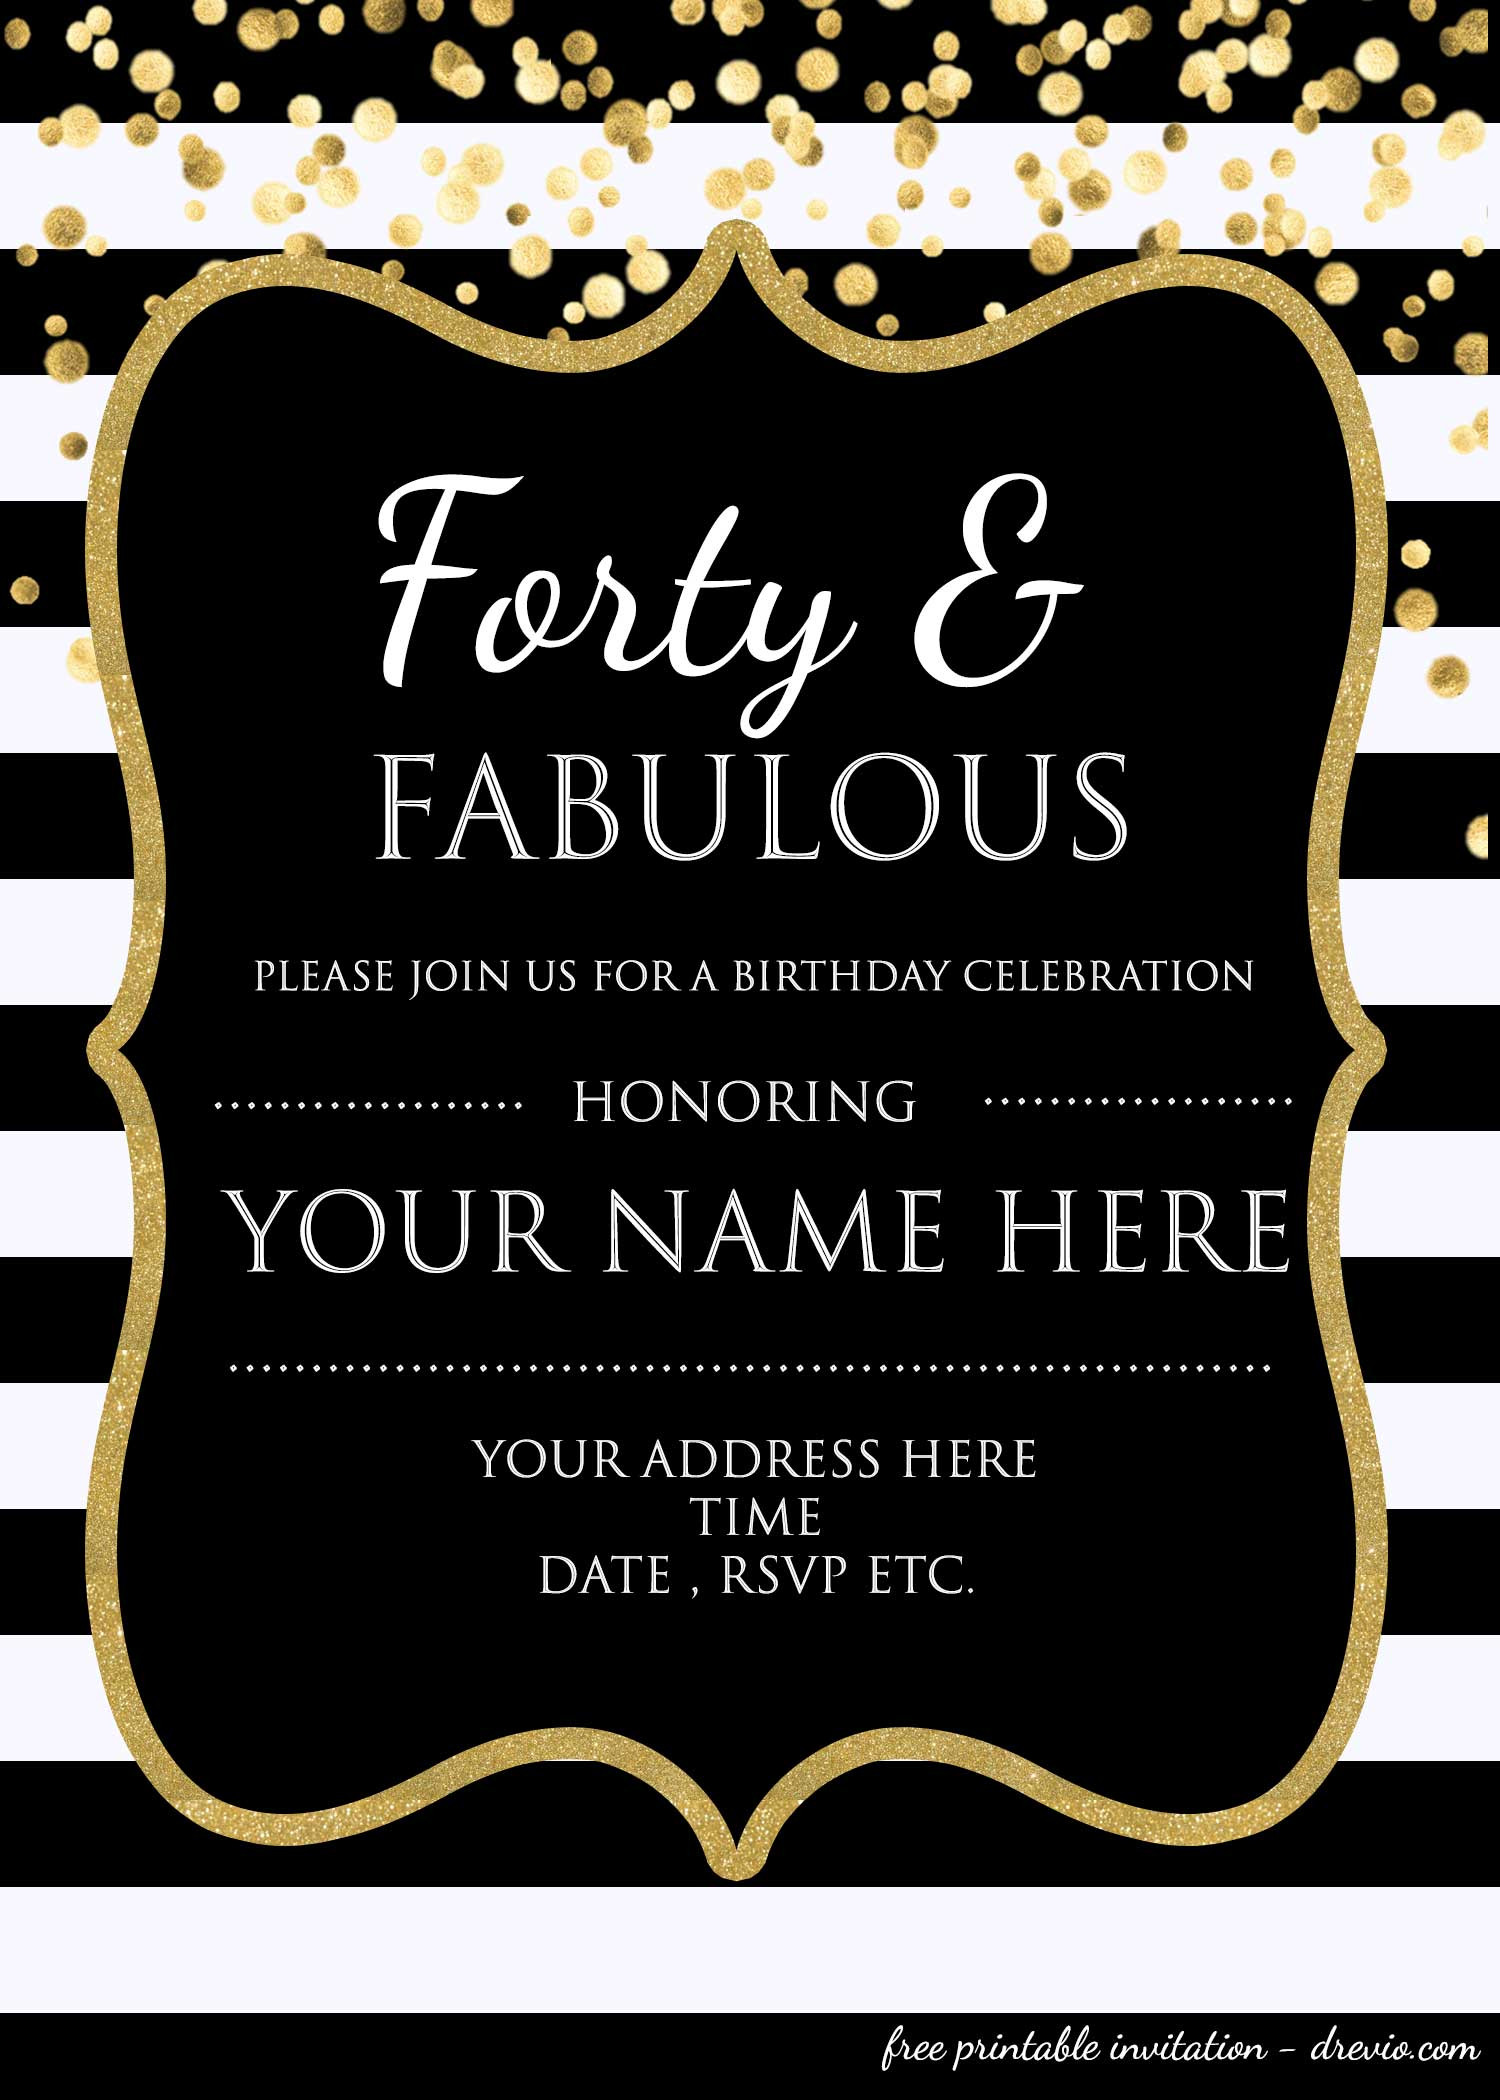 Free Birthday Party Invitations Templates
 40th Birthday Invitation Template – FREE – FREE Printable